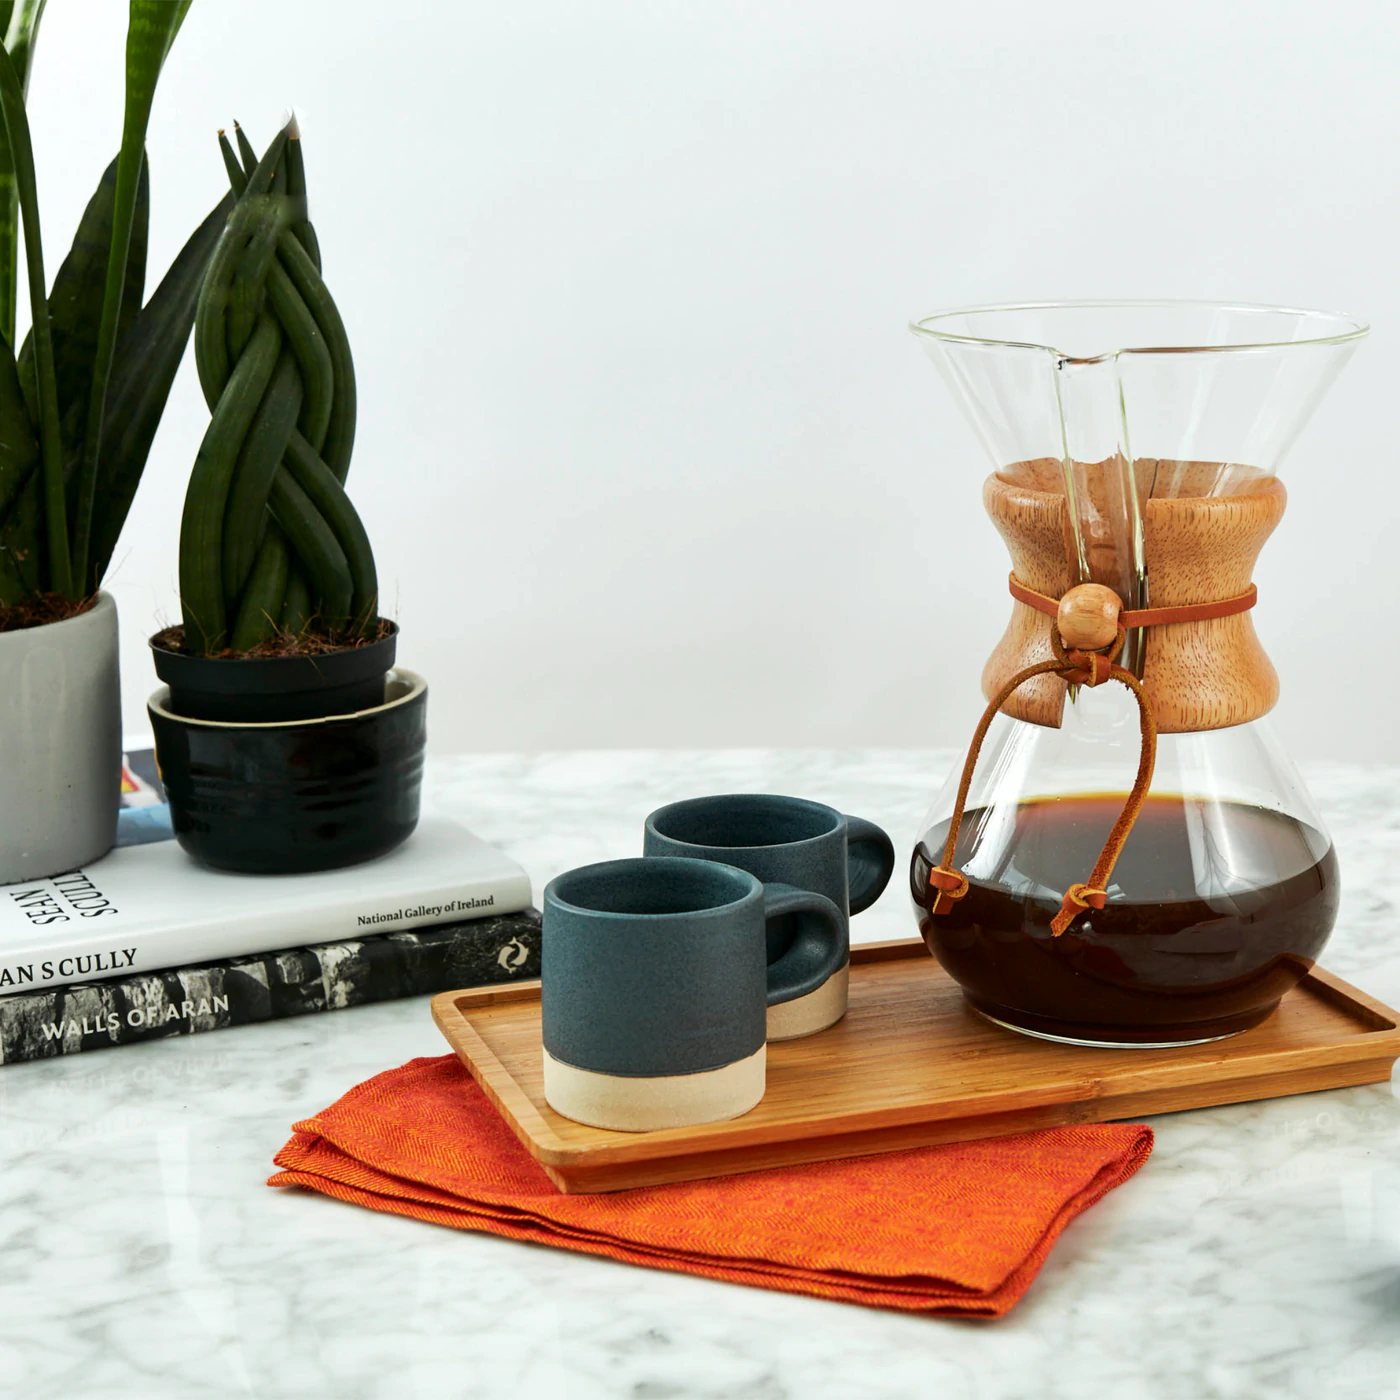 TIMEMORE Coffee Scale with Time Black Mirror Nano - Black – timemore